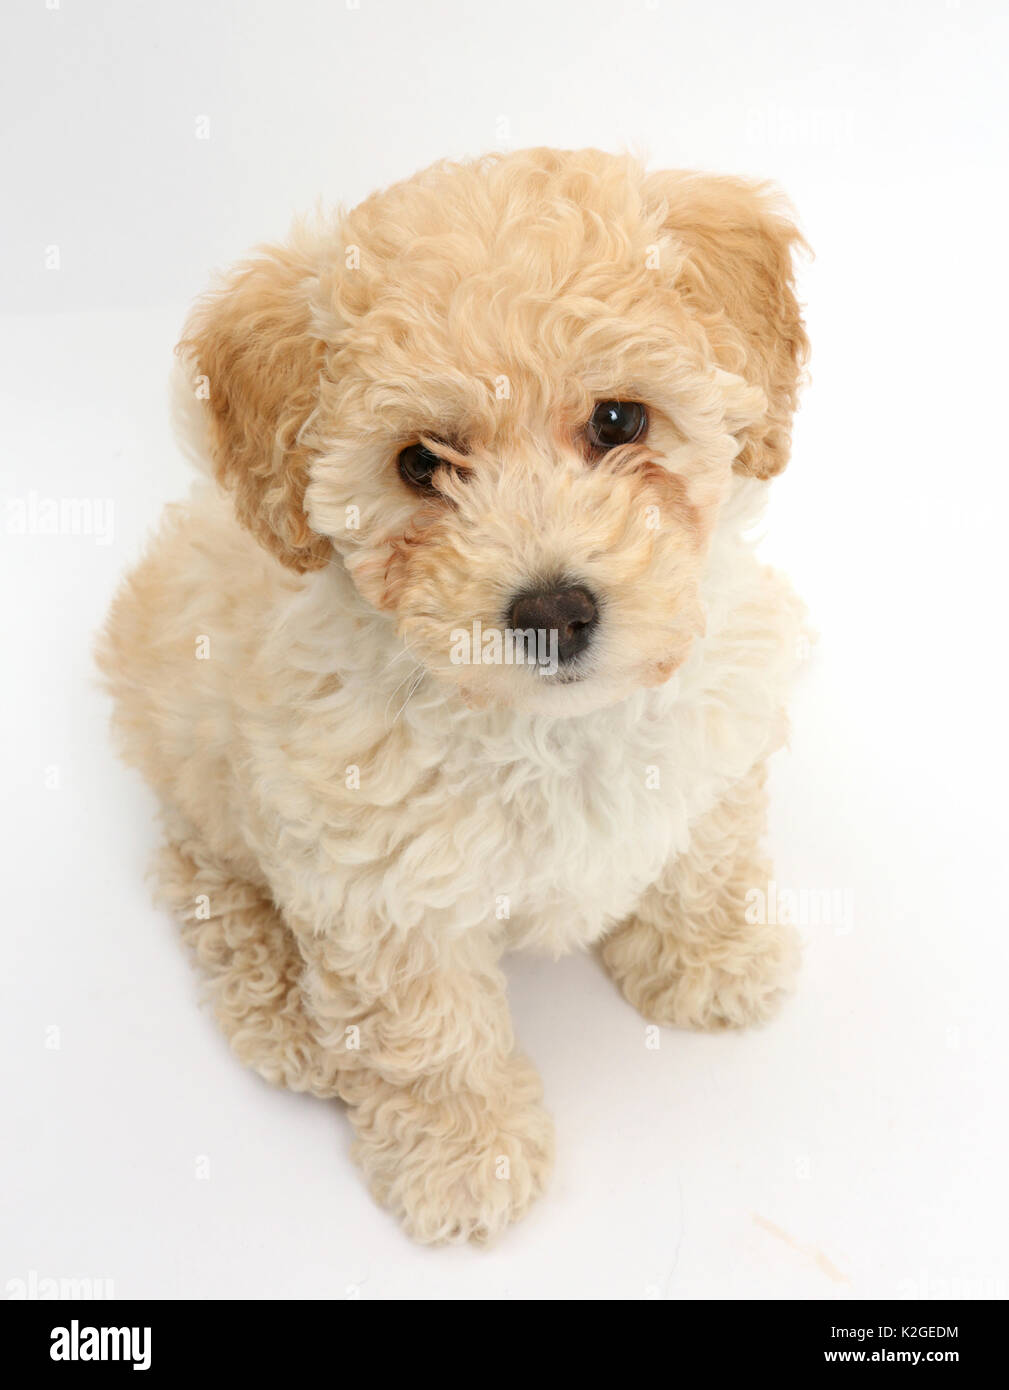 poochon puppy bichon frise cross poodle age 6 weeks K2GEDM